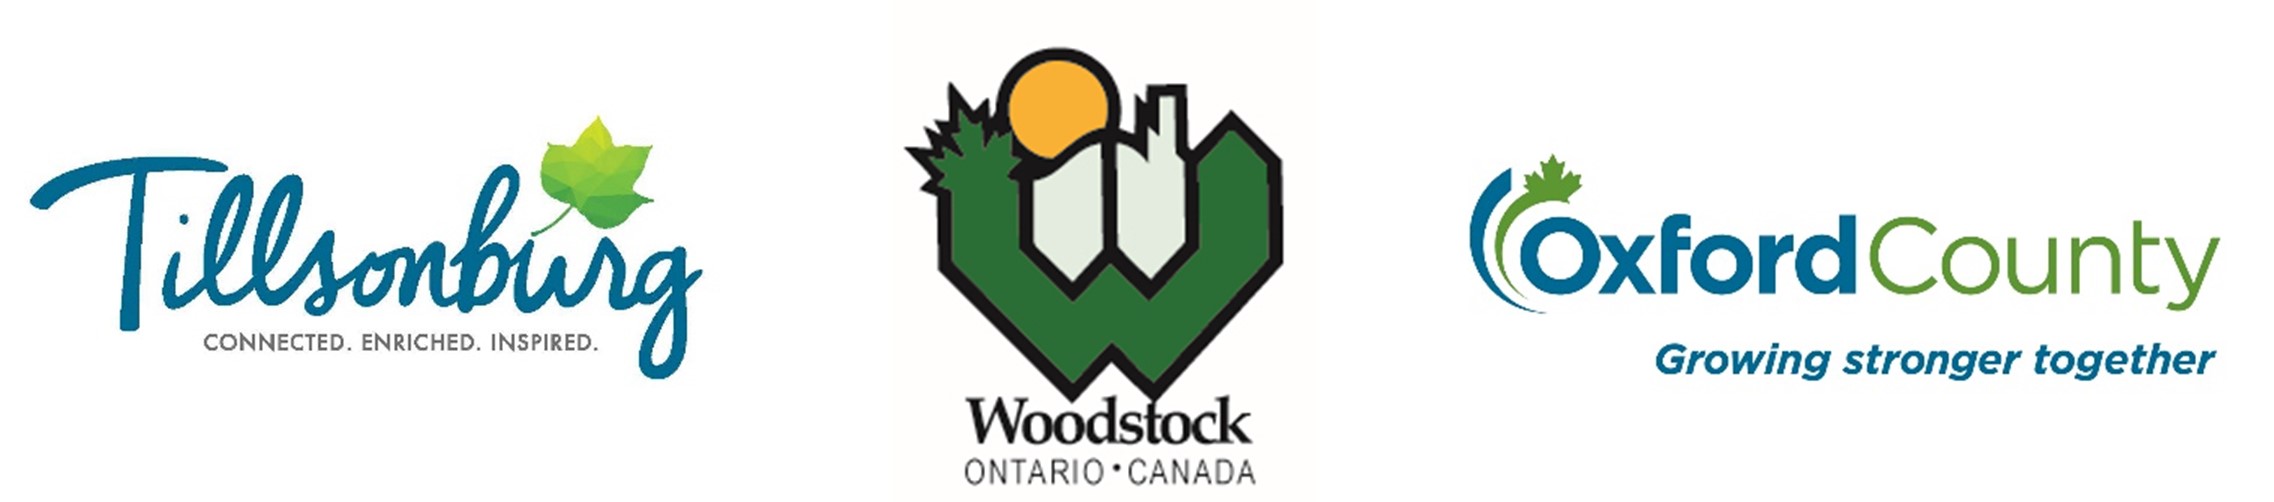 Oxford County, Tillsonburg and Woodstock logos